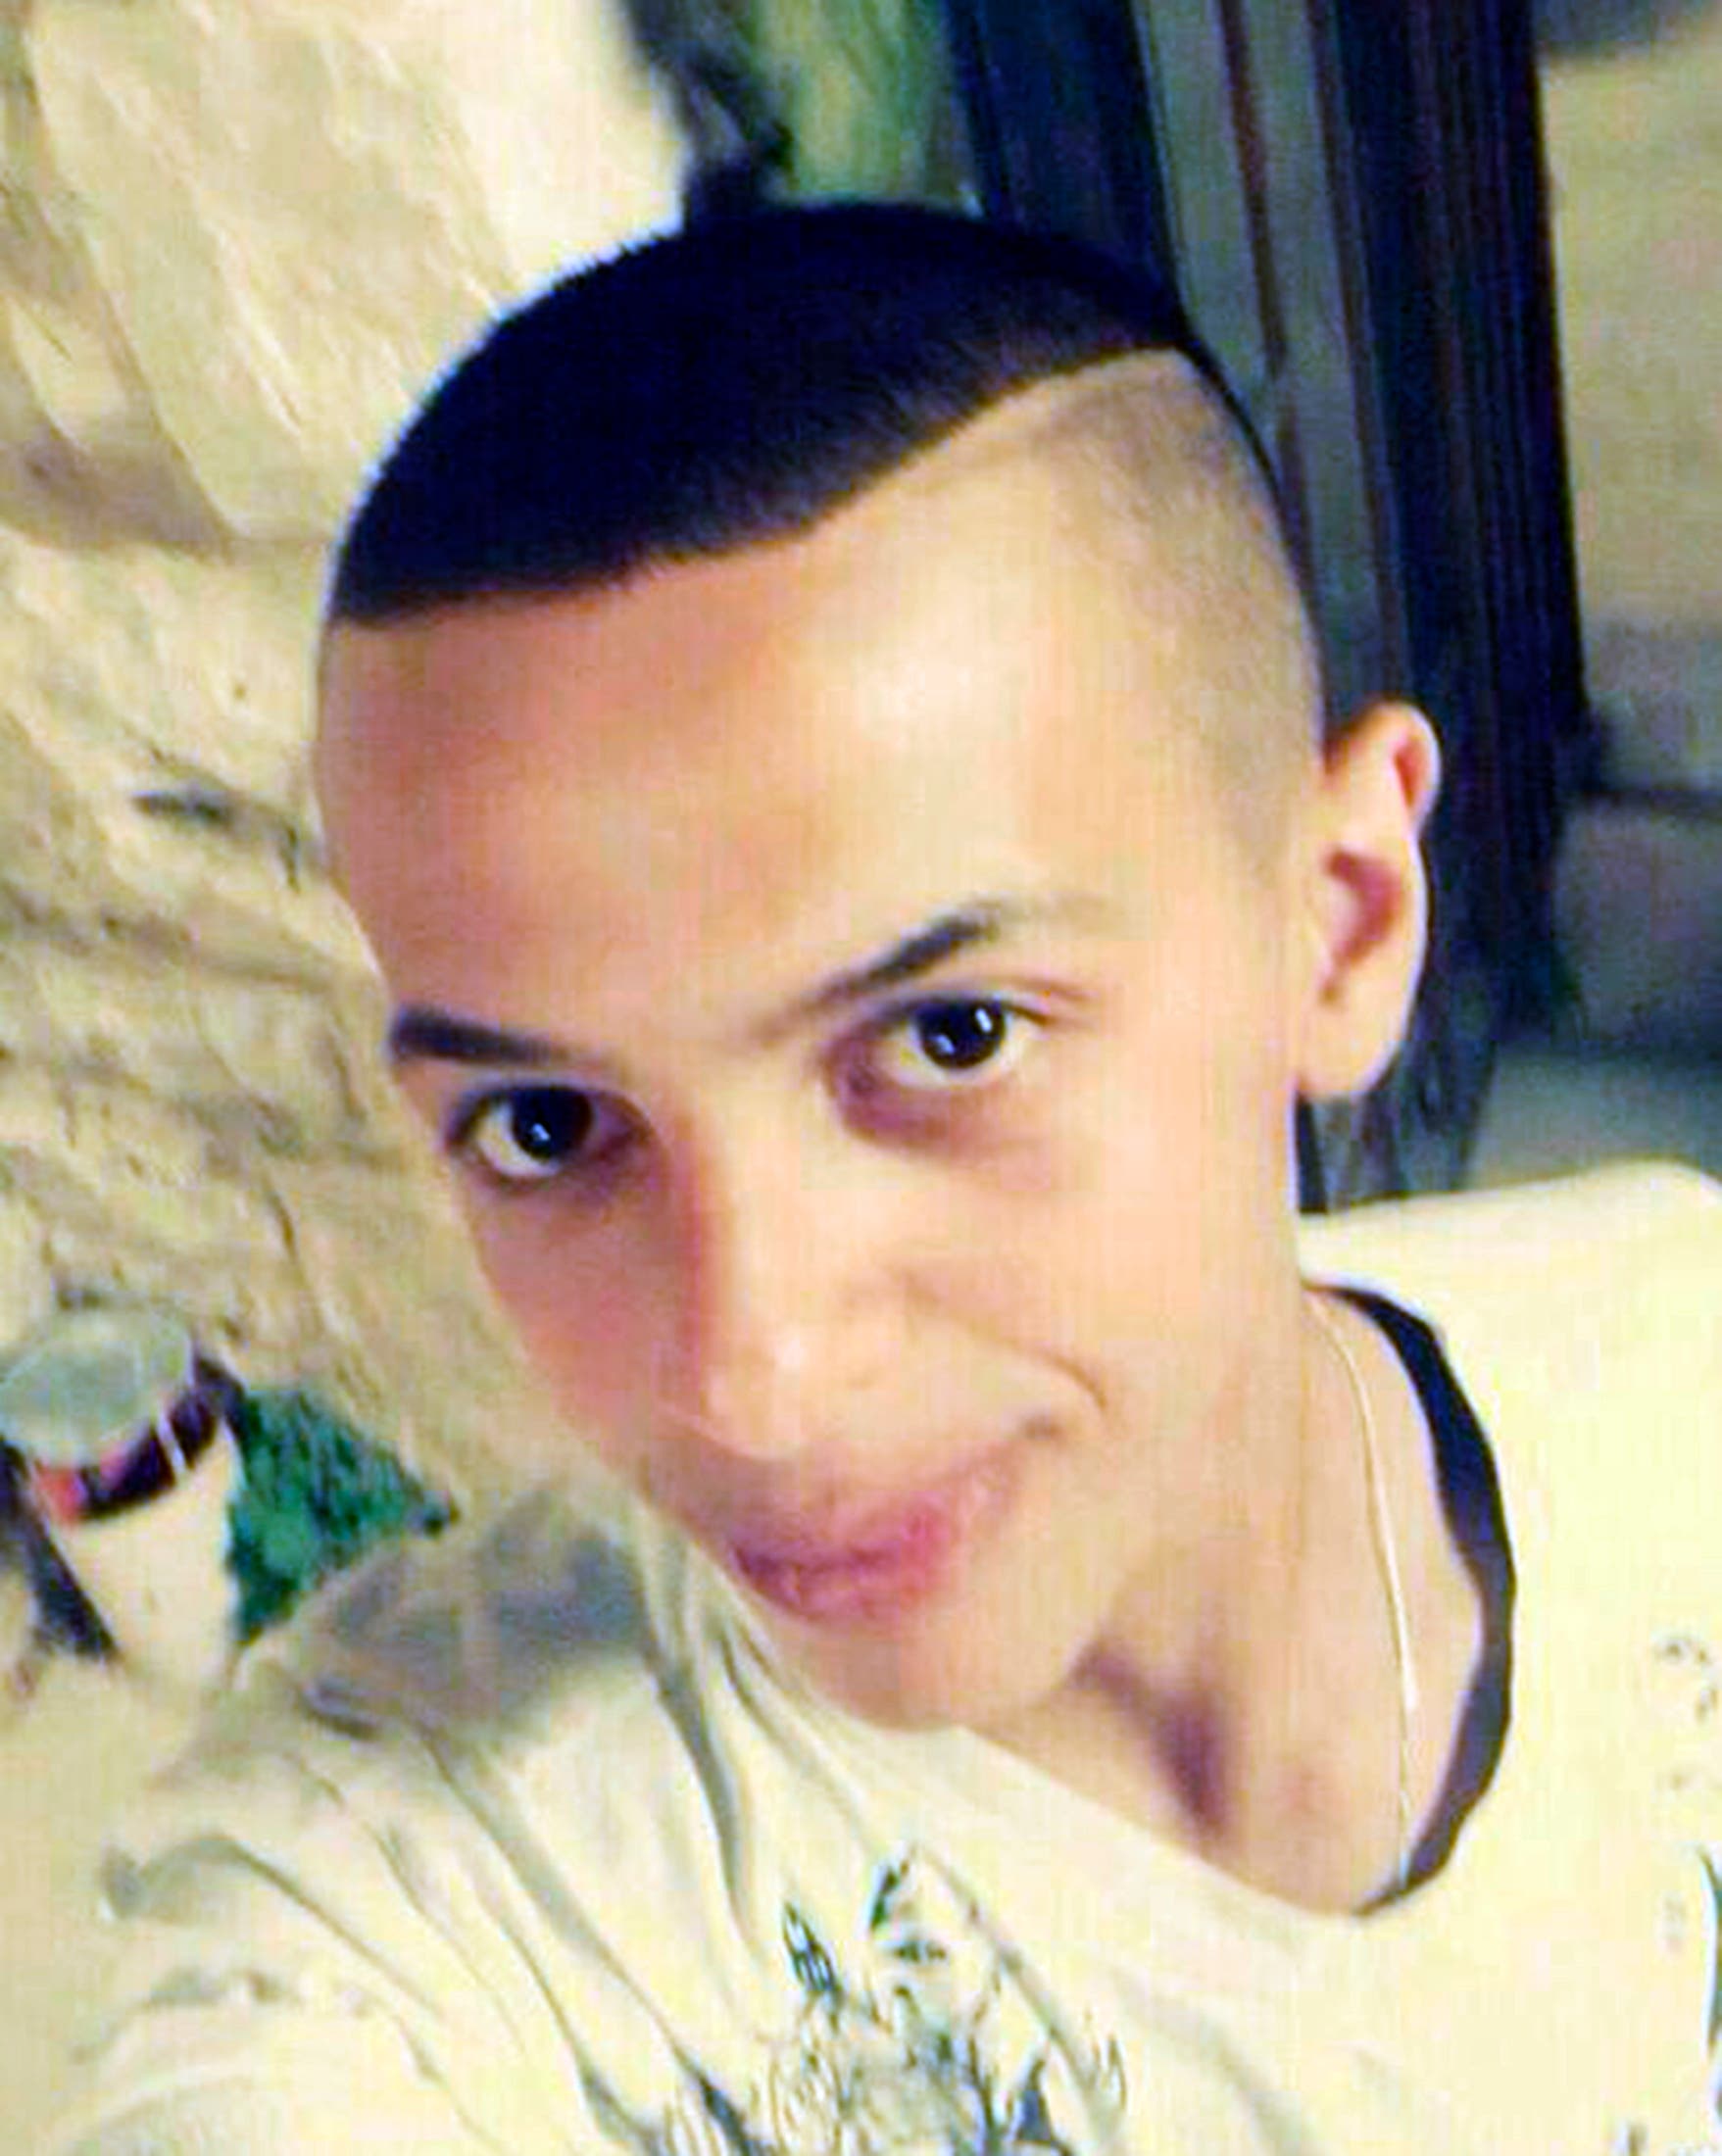 Israel charges three Jews over Palestinian teen murder | Al Arabiya English